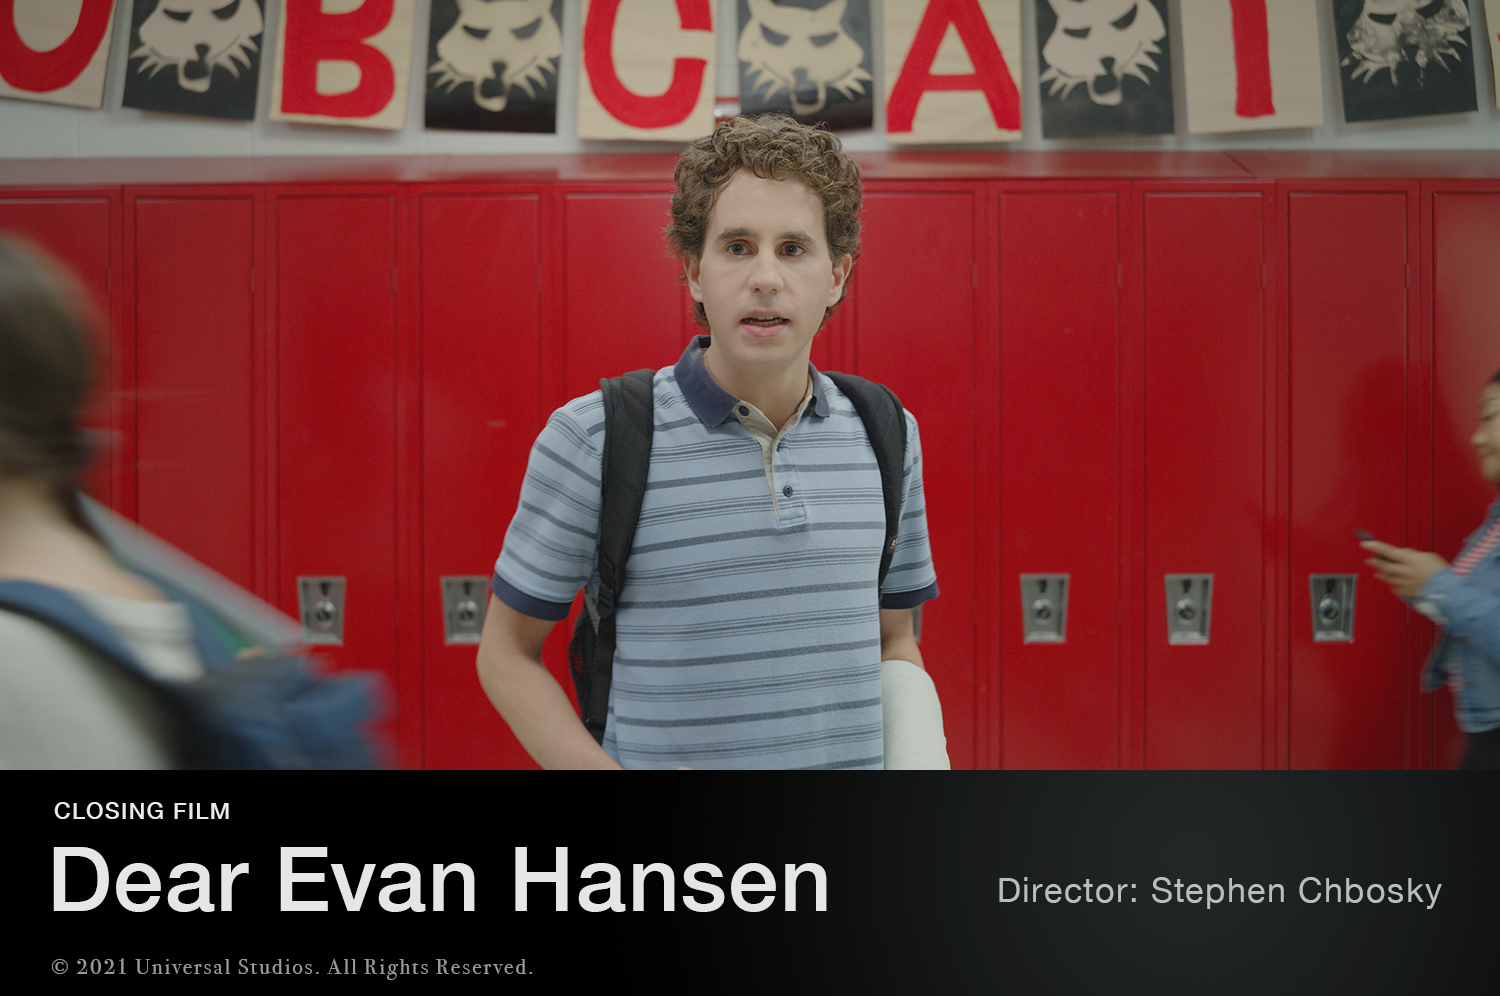 CLOSING FILM "Dear Evan Hansen" Director Stephen Chbosky